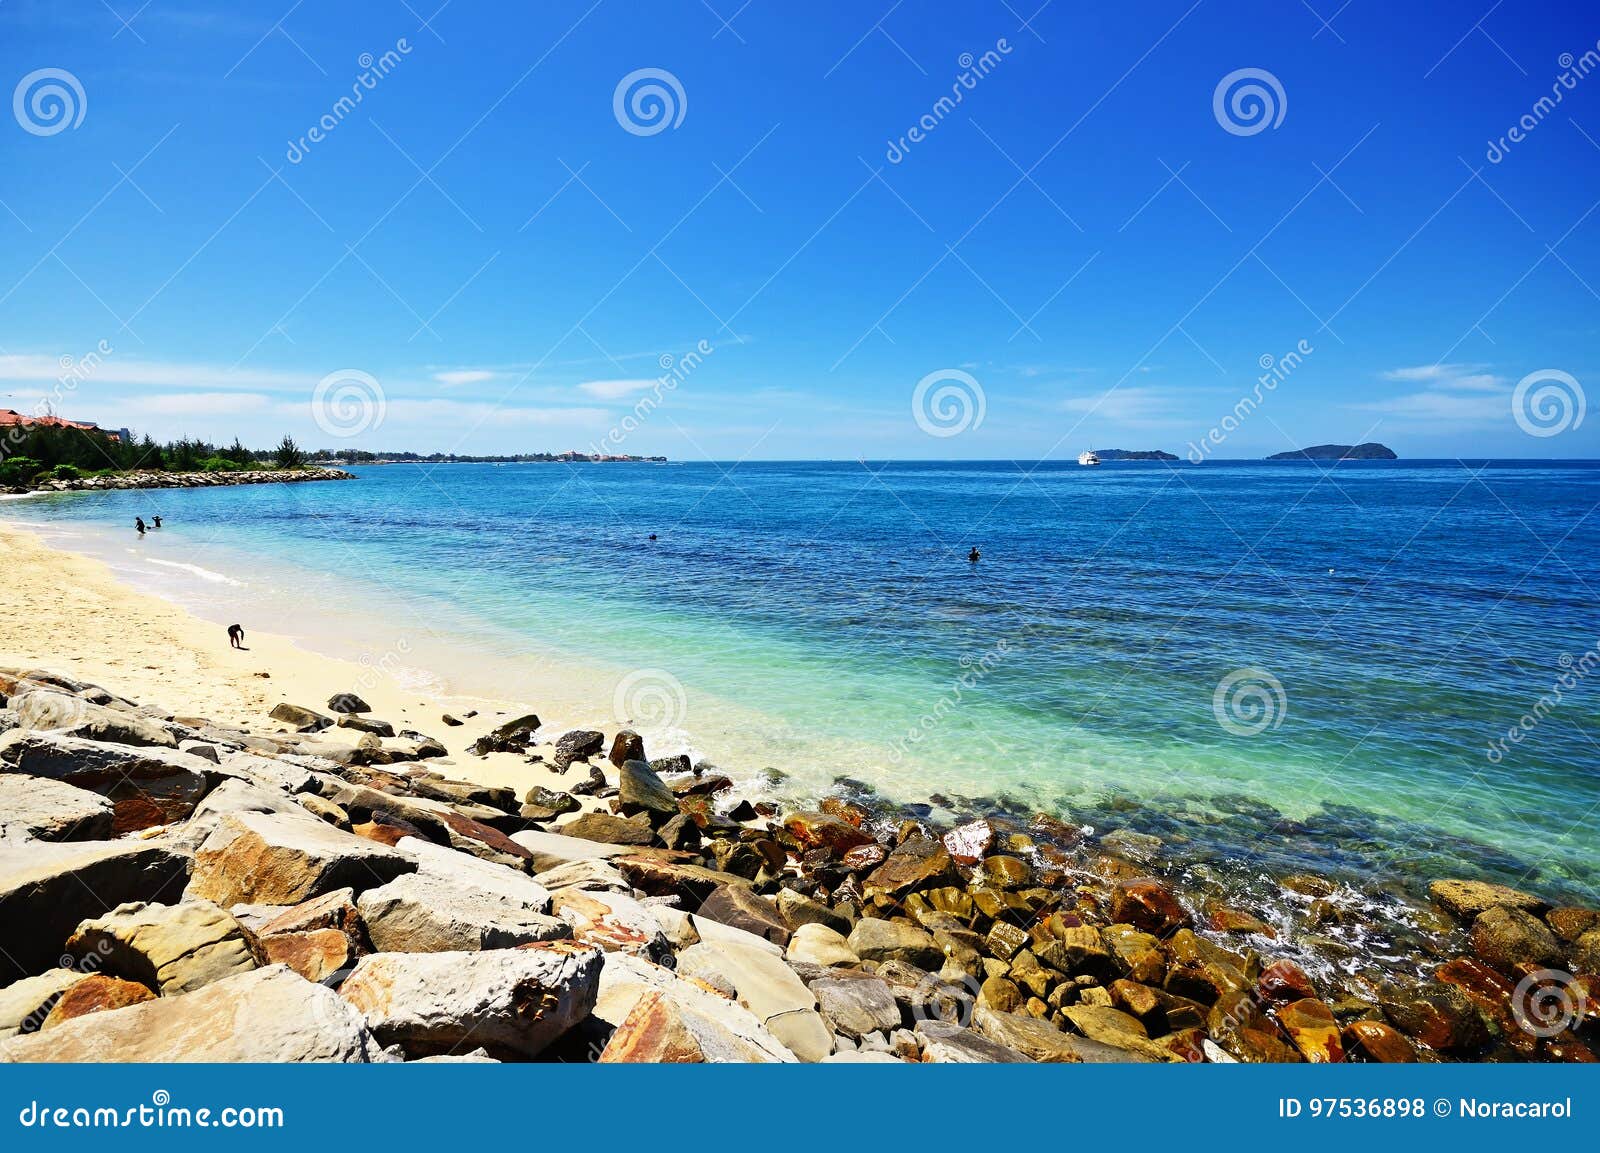 Kota Kinabalu Beach stock photo. Image of sand, kota - 97536898